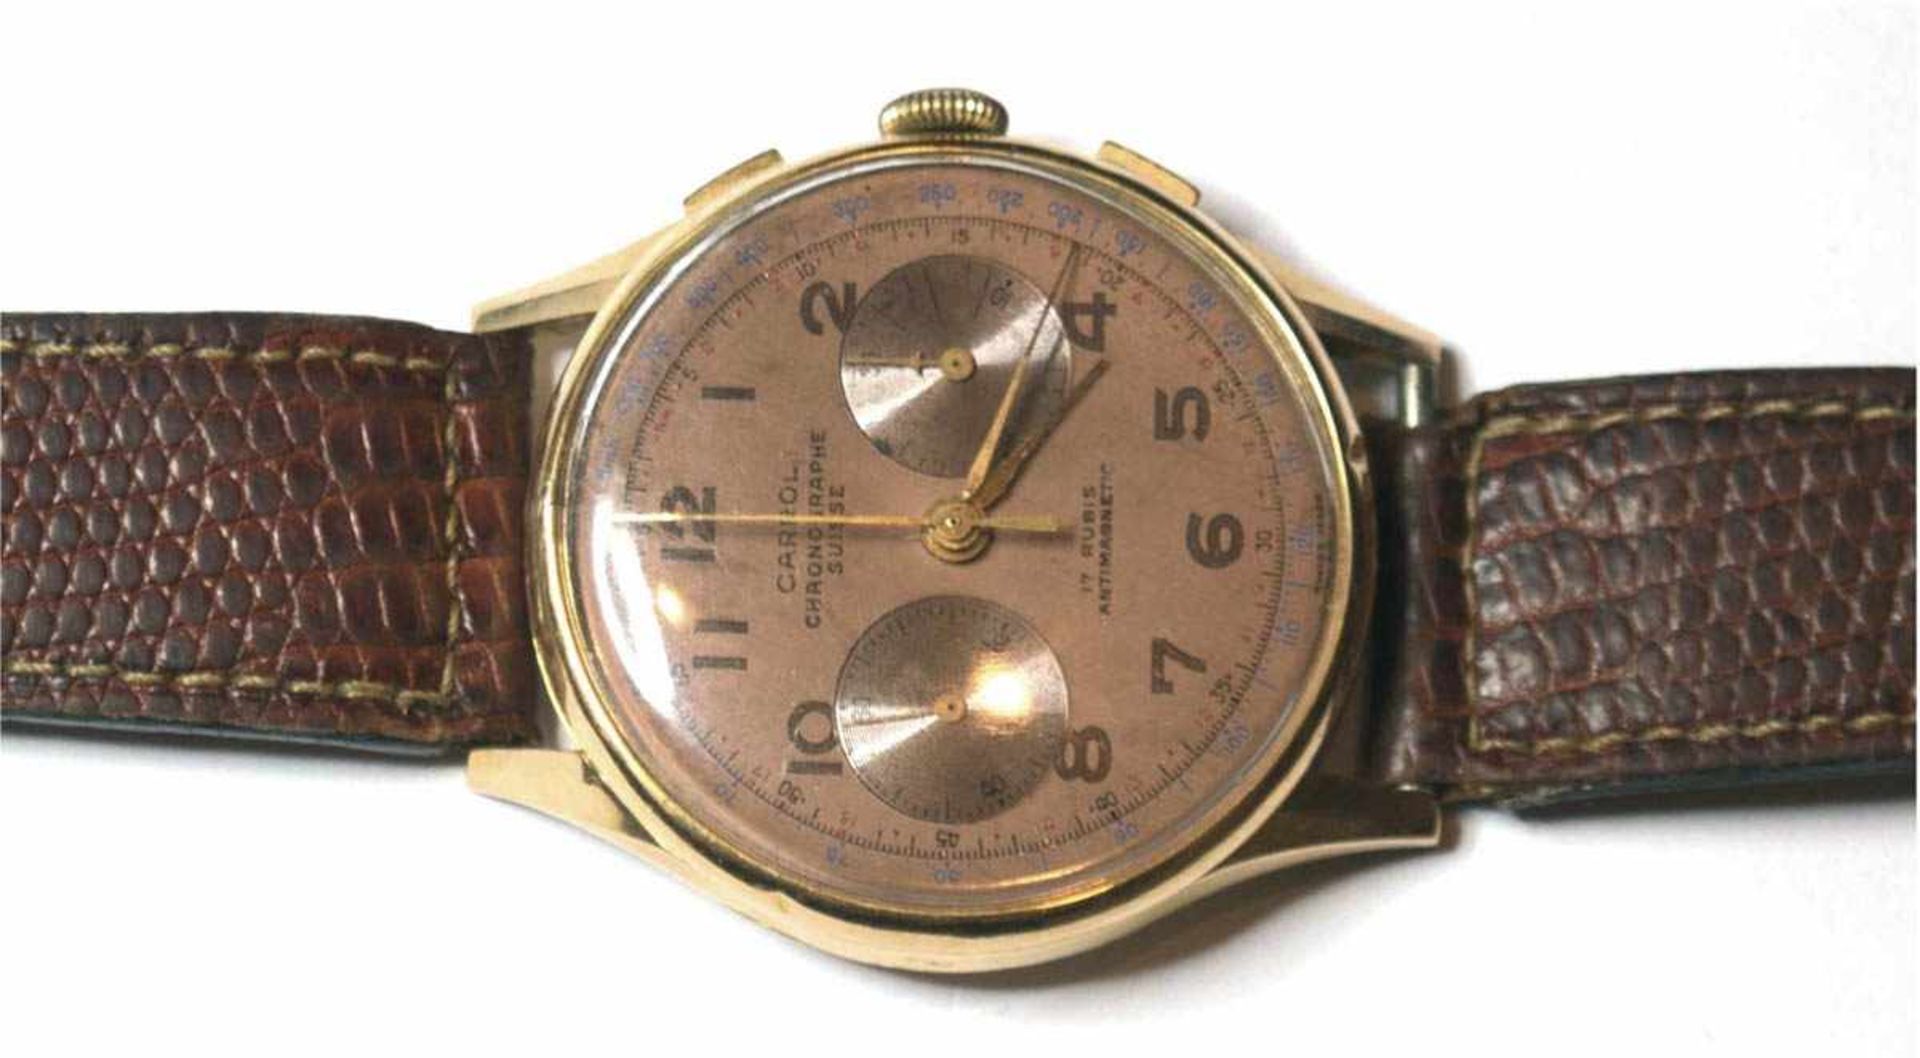 Herren-Armbanduhr "Carrol", Suisse, Chronograph um 1950, 750er GG, 17 Rubis, Anitmagnetic,braunes